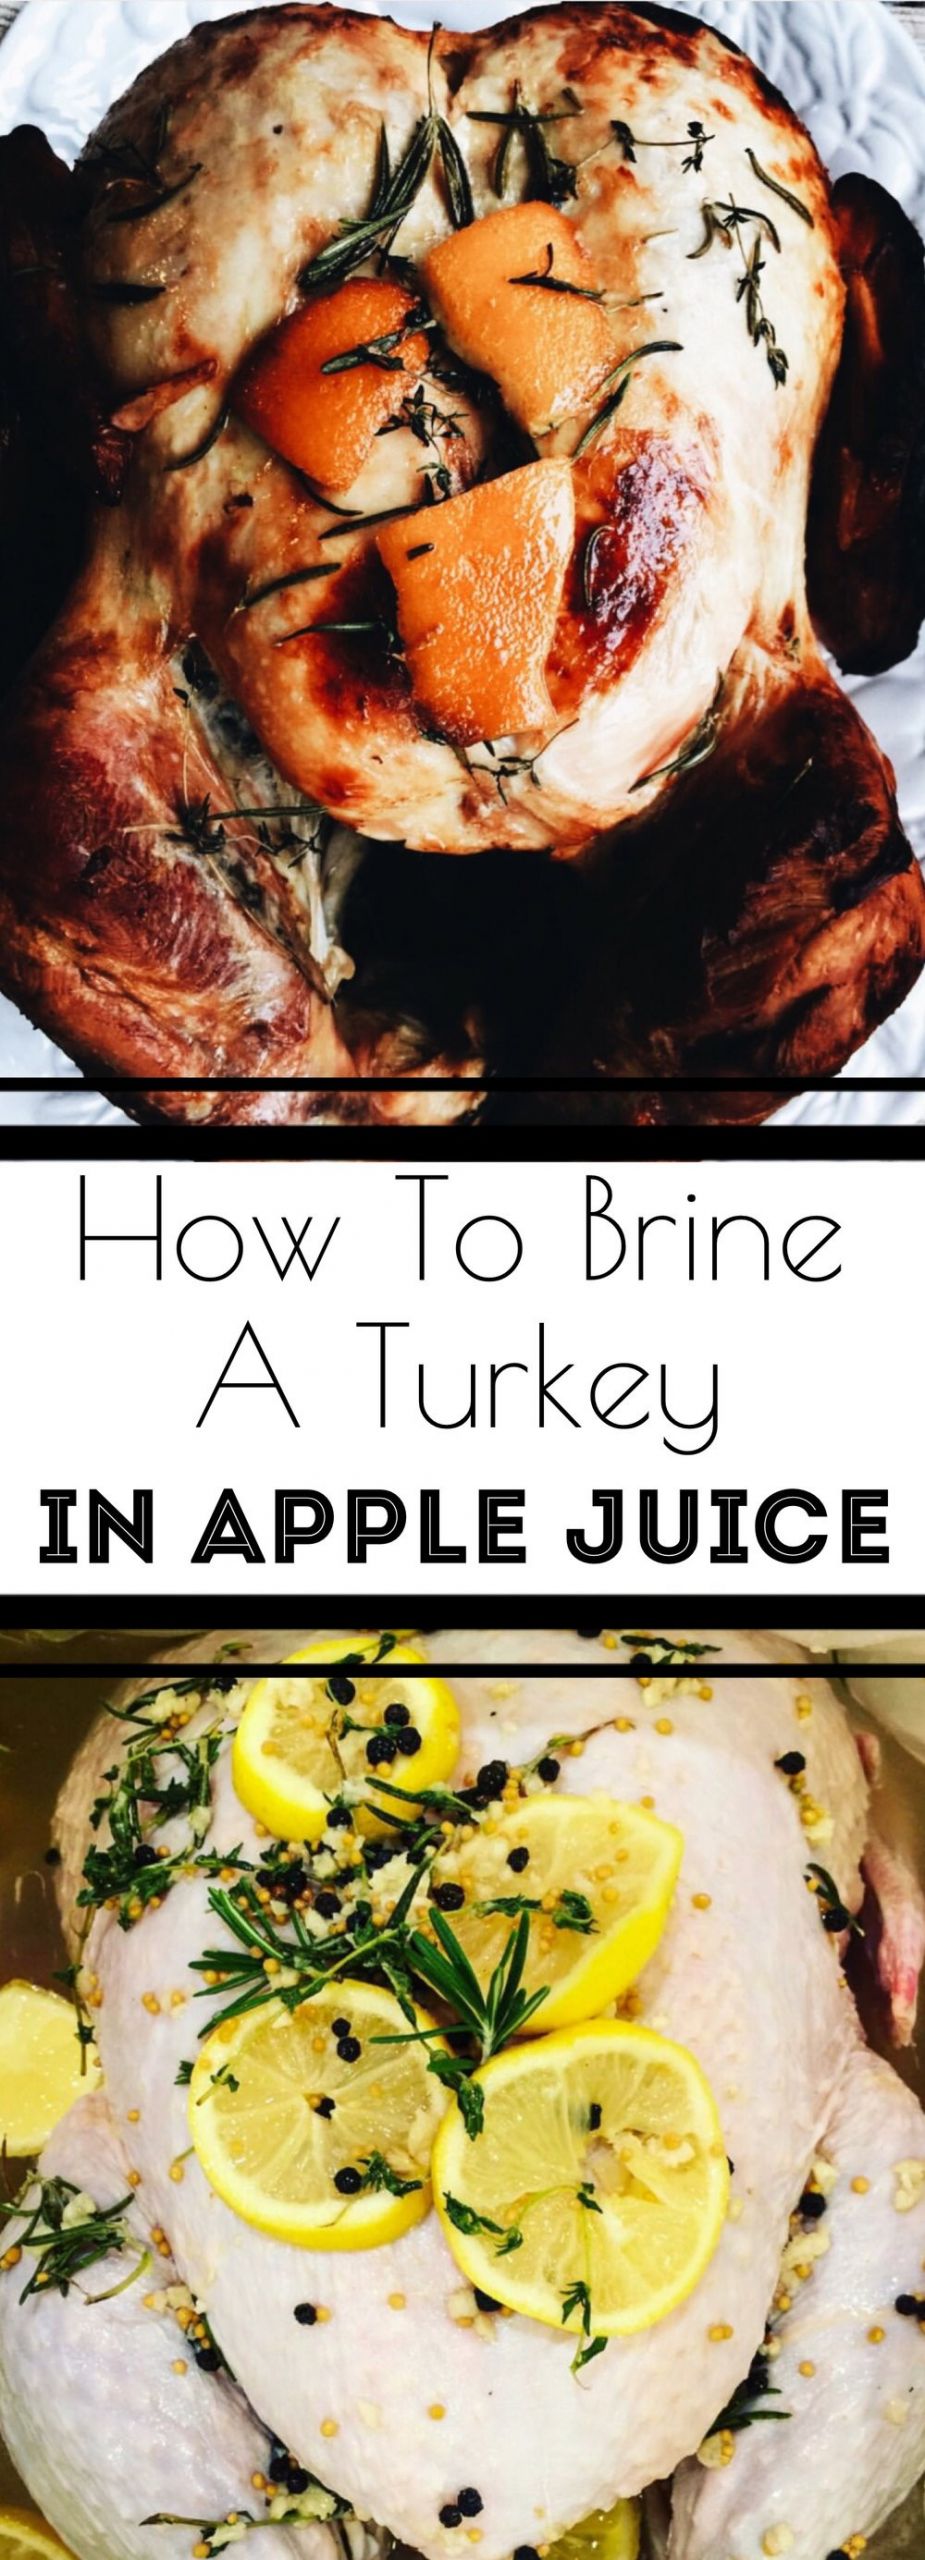 Apple Juice Turkey Brine
 How To Brine a Turkey In Apple Juice — First Thyme Mom